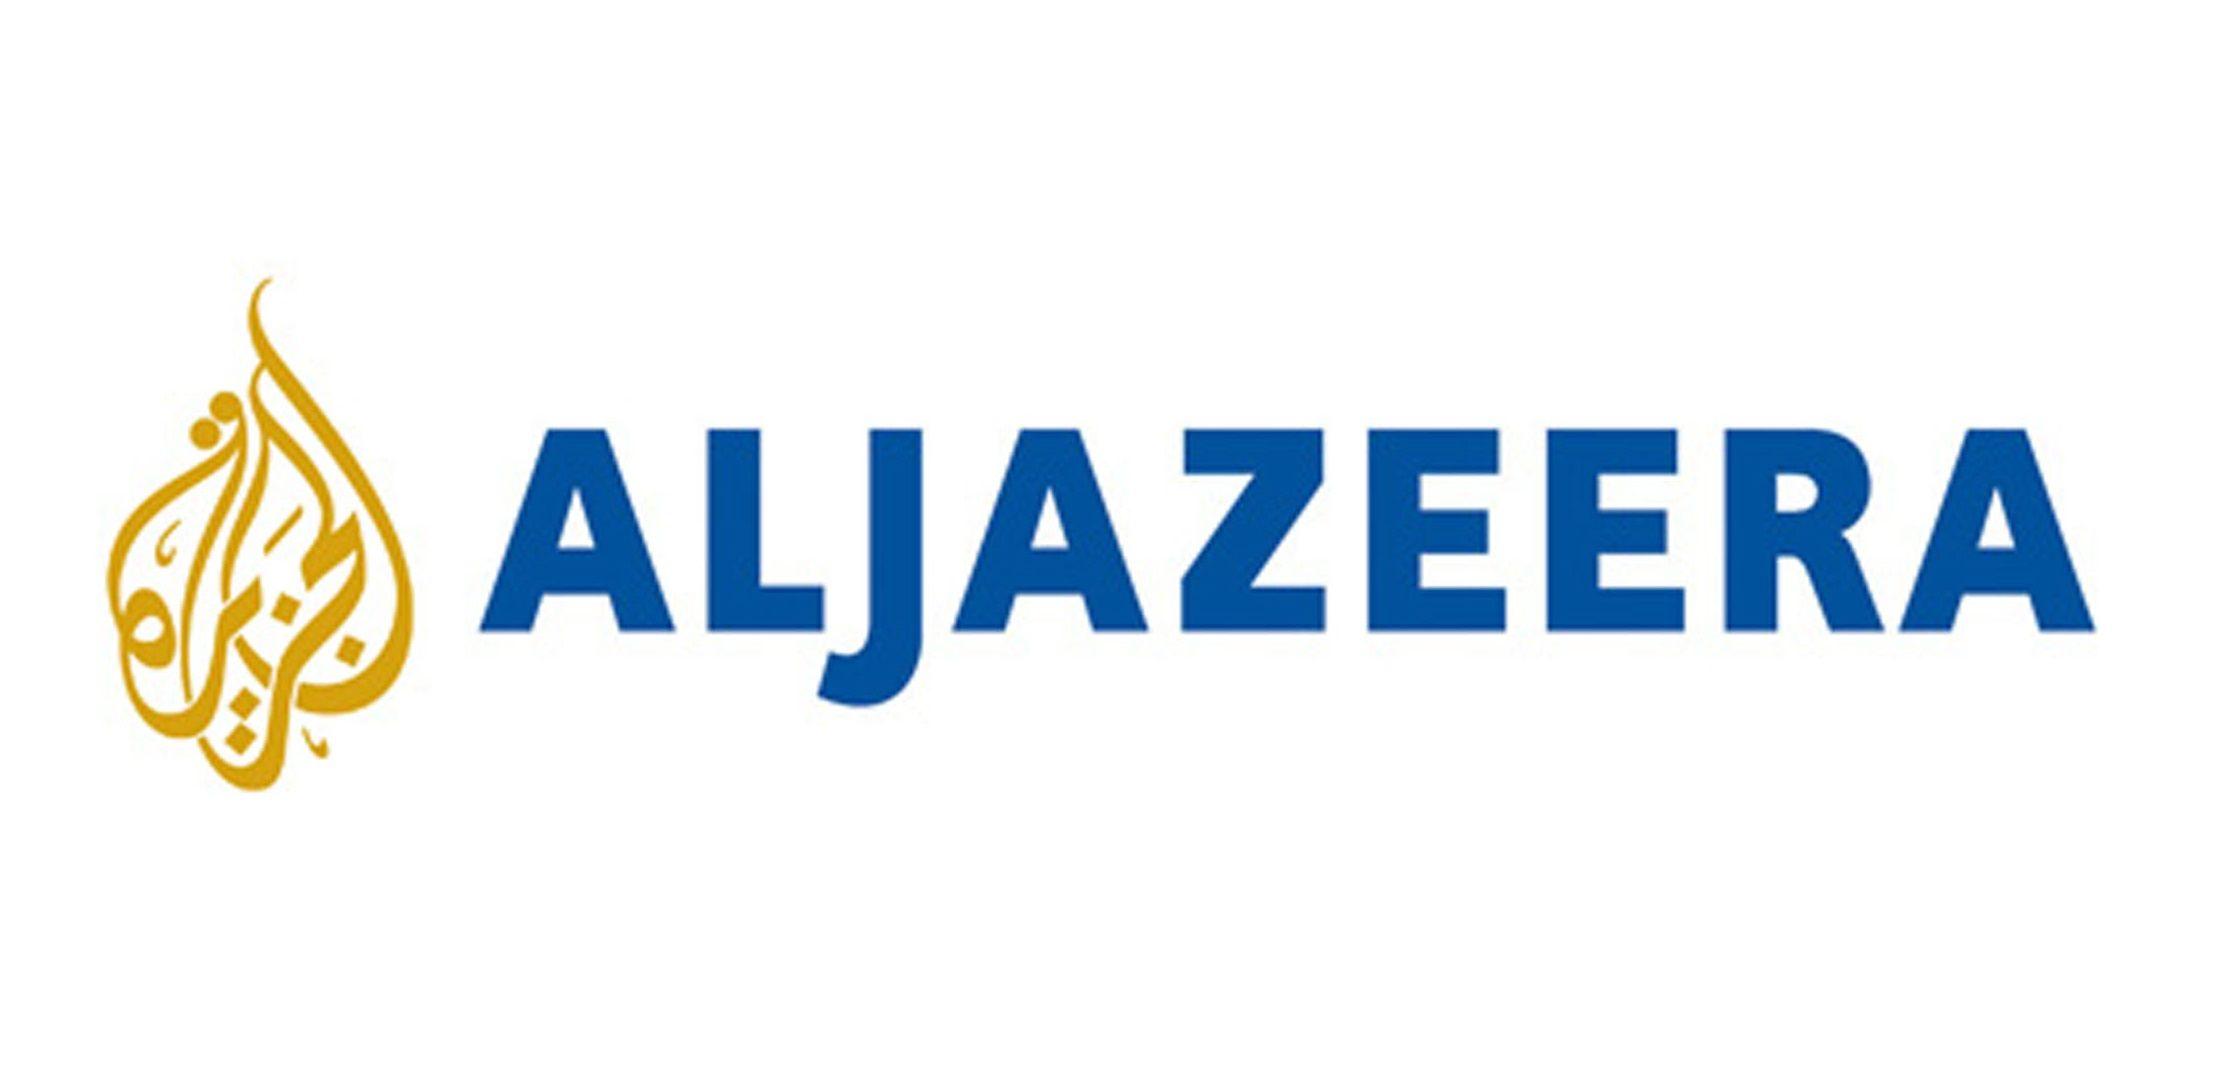 Atthe End with a Blue B Logo - Qatar: Saudi led coalition lists the closure of Al Jazeera among